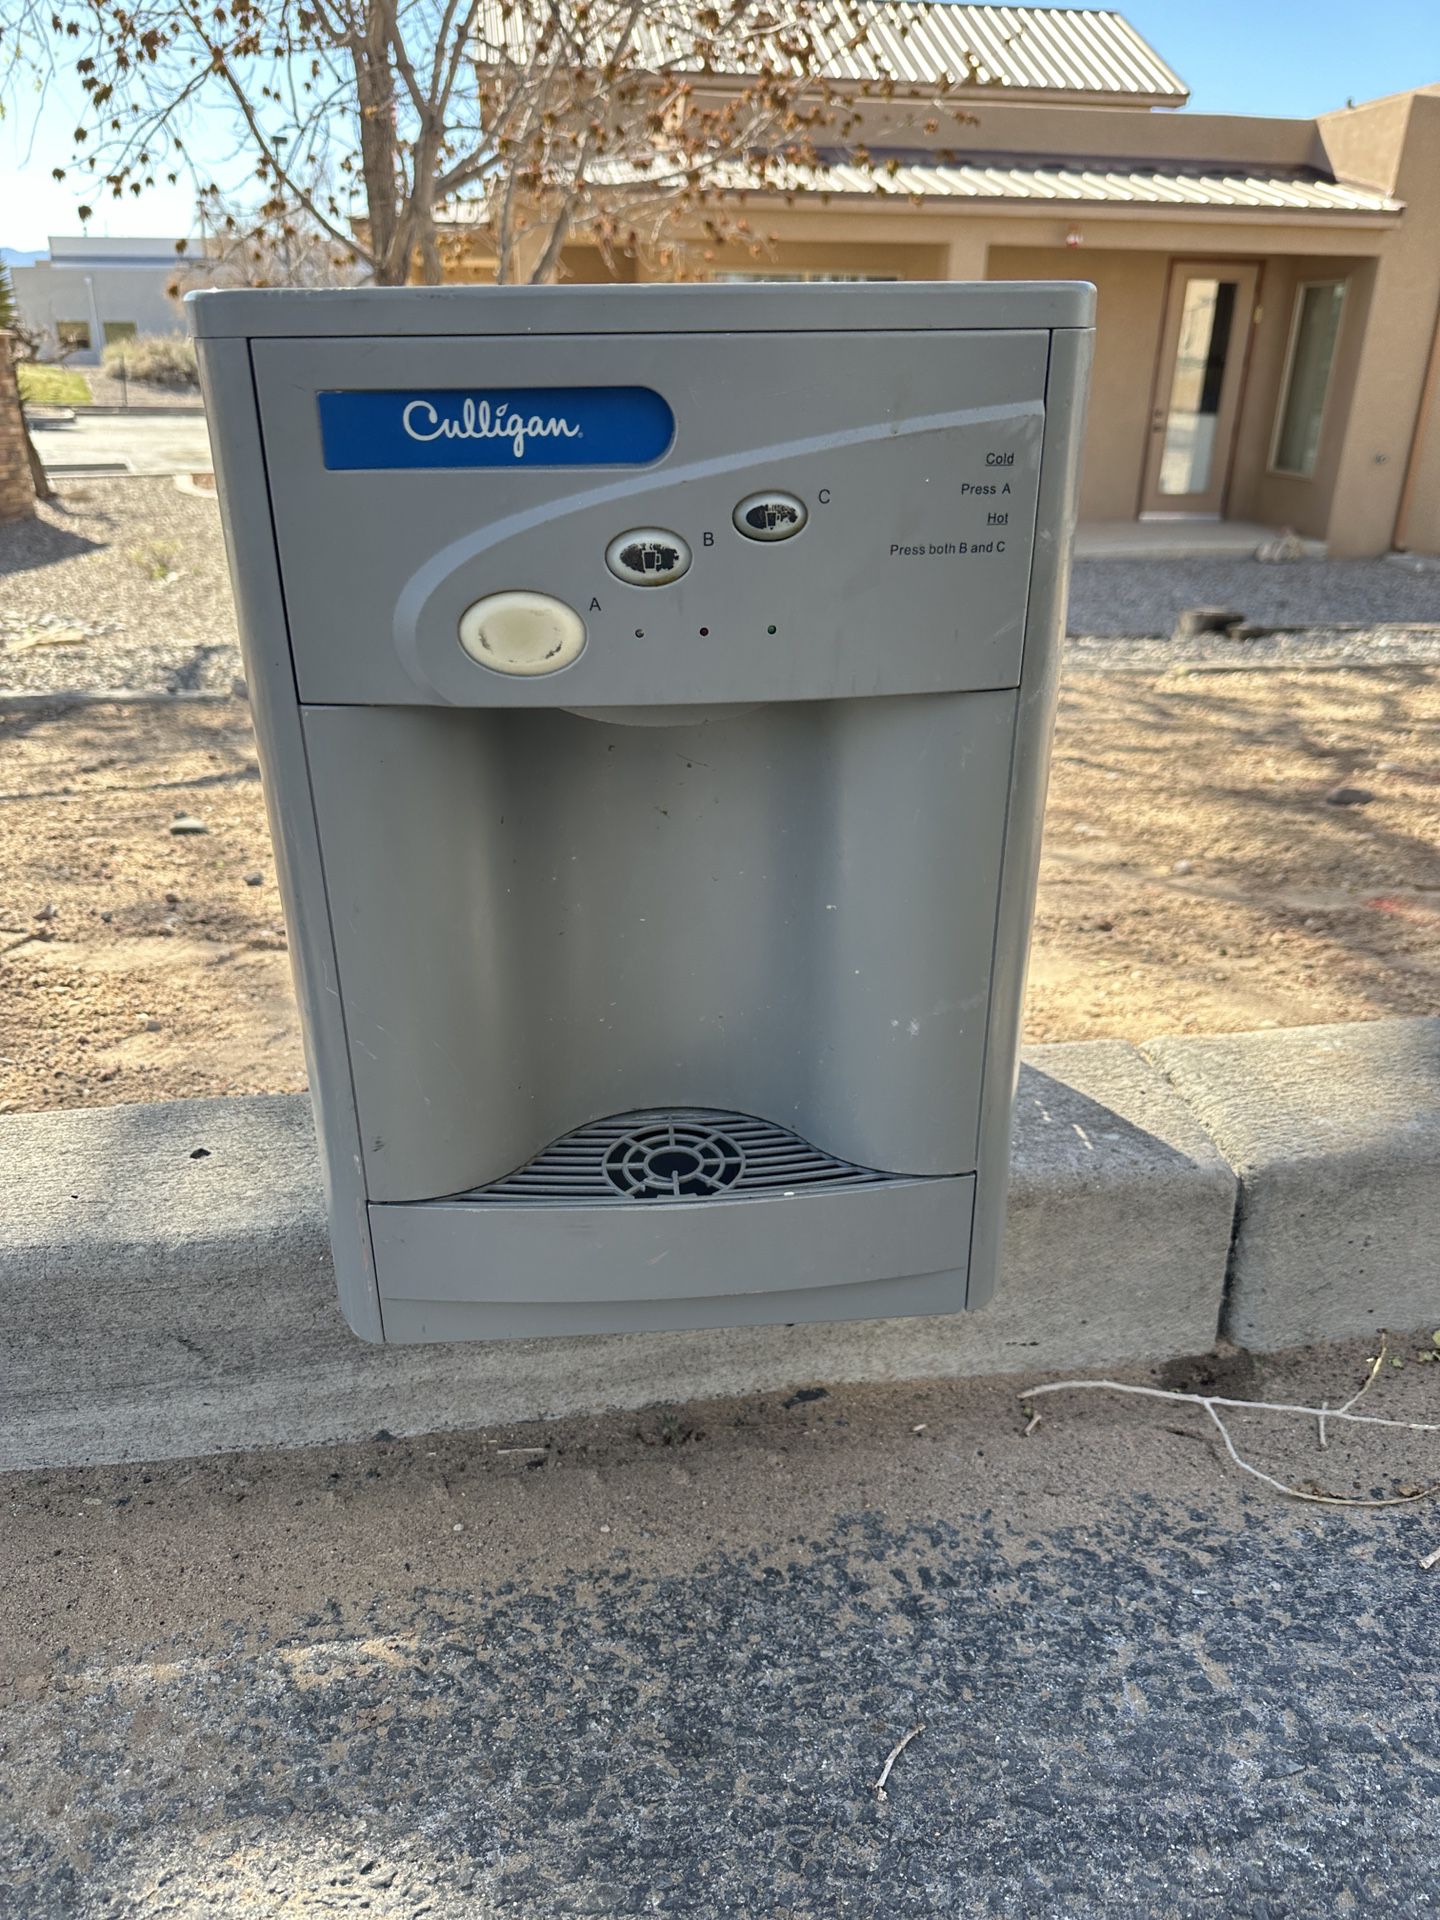 Culligan Water Cooler/Heater